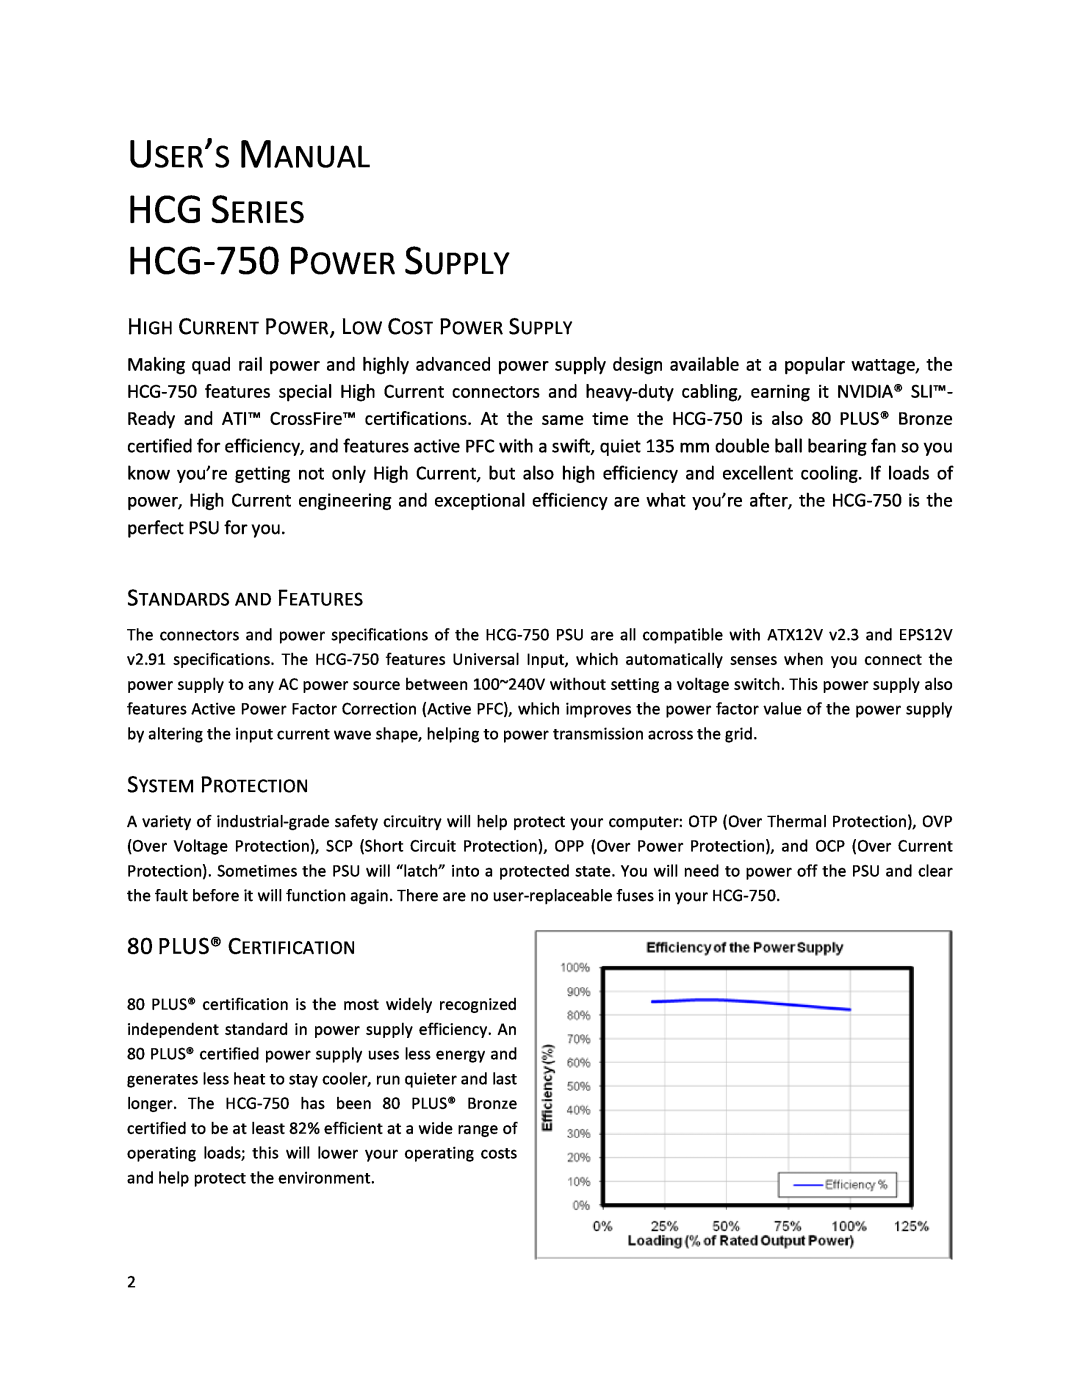 Antec user manual HCG SERIES HCG-750 POWER SUPPLY, User’S Manual 